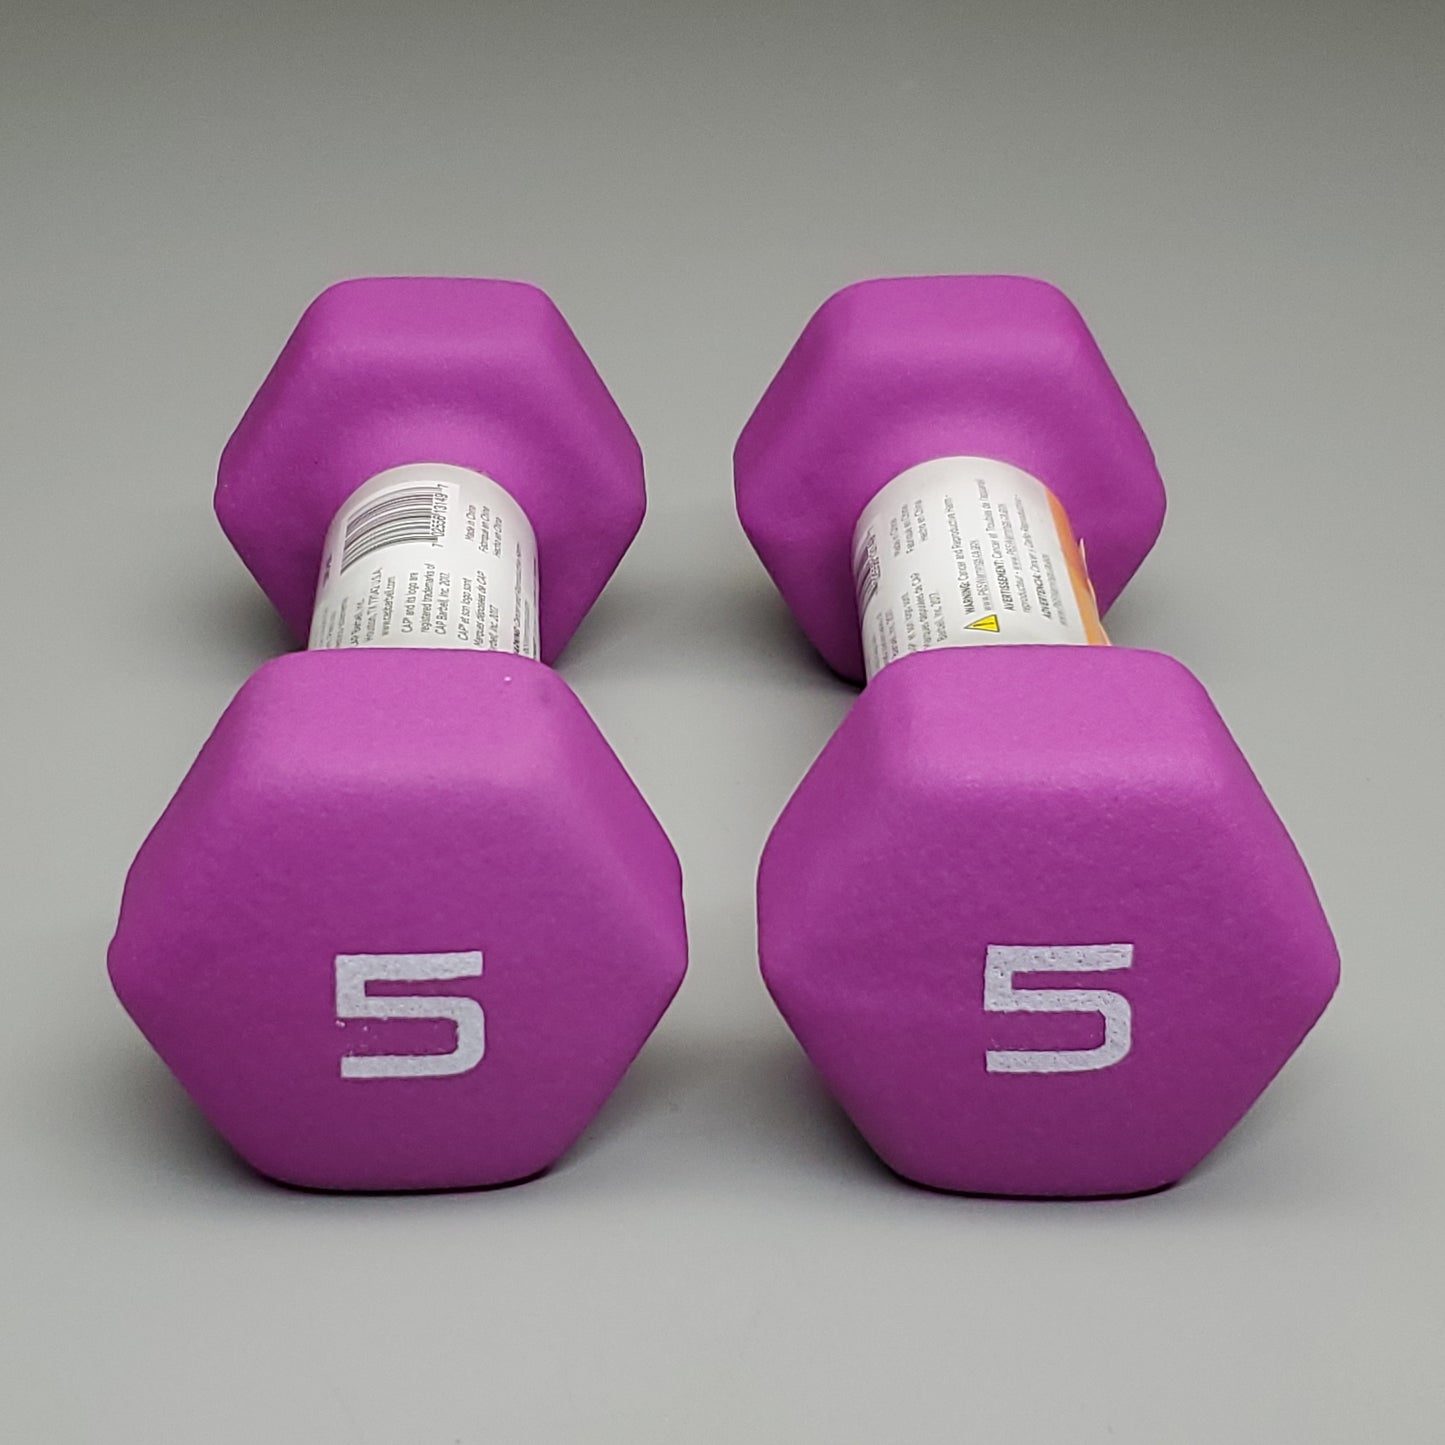 CAP 2PK! Neoprene Coated Dumbbells 5 lbs Each Purple SDN5-005 (New)